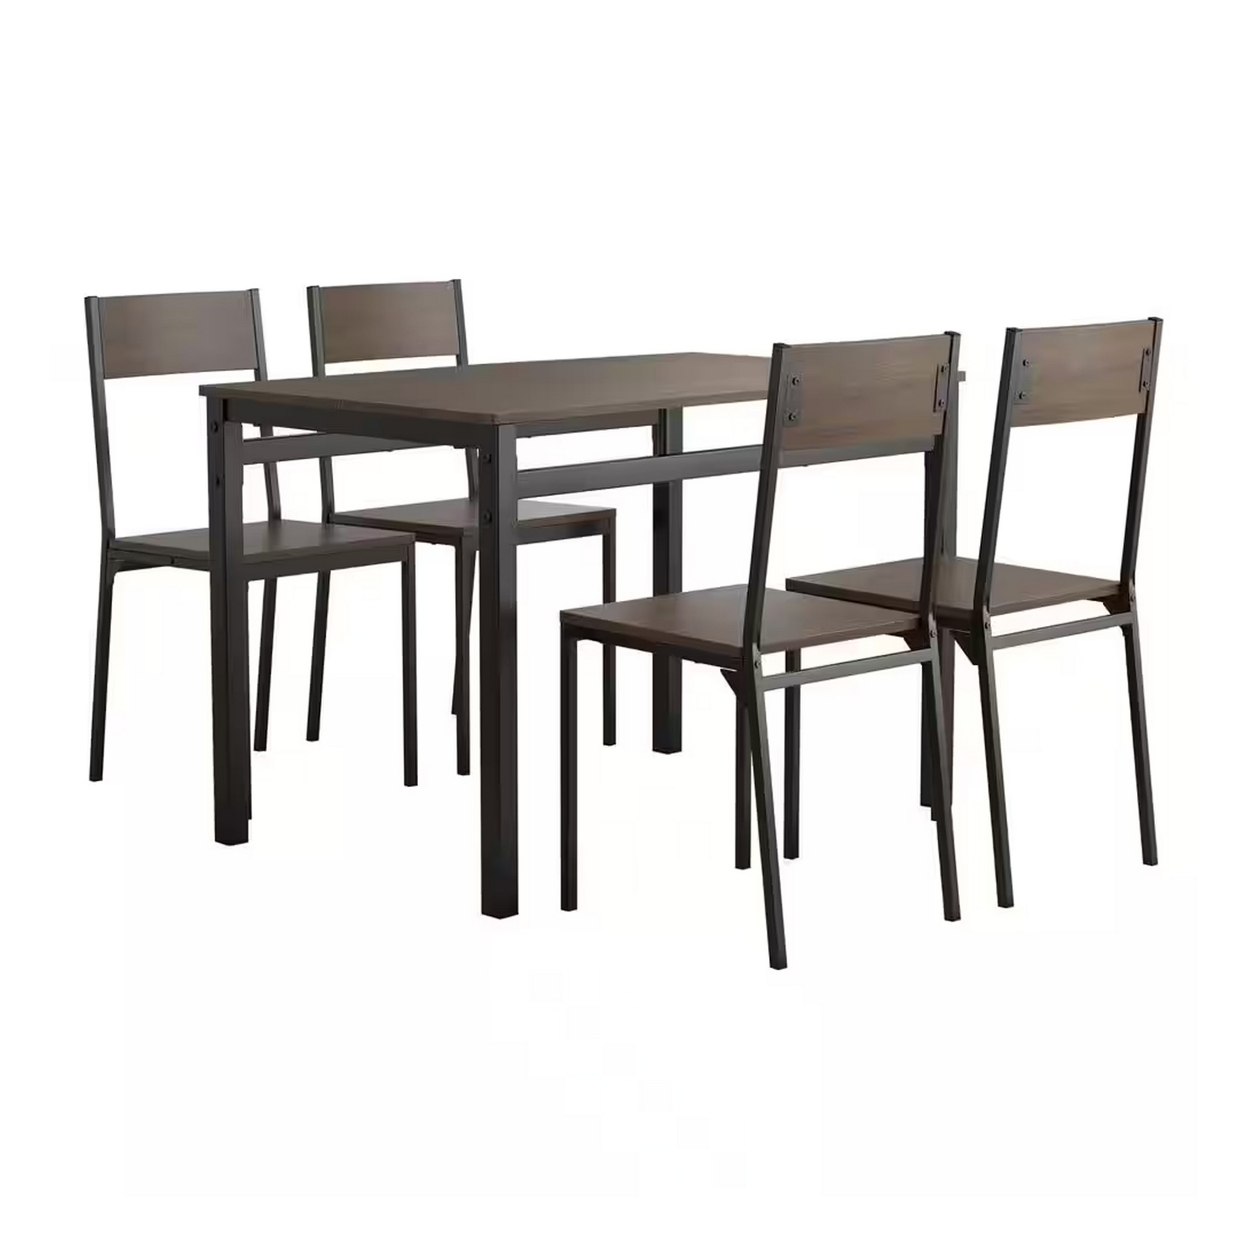 5 Piece Dining Set, Brown Wood Tabletop And Seats, Matte Black Metal Frames- Saltoro Sherpi